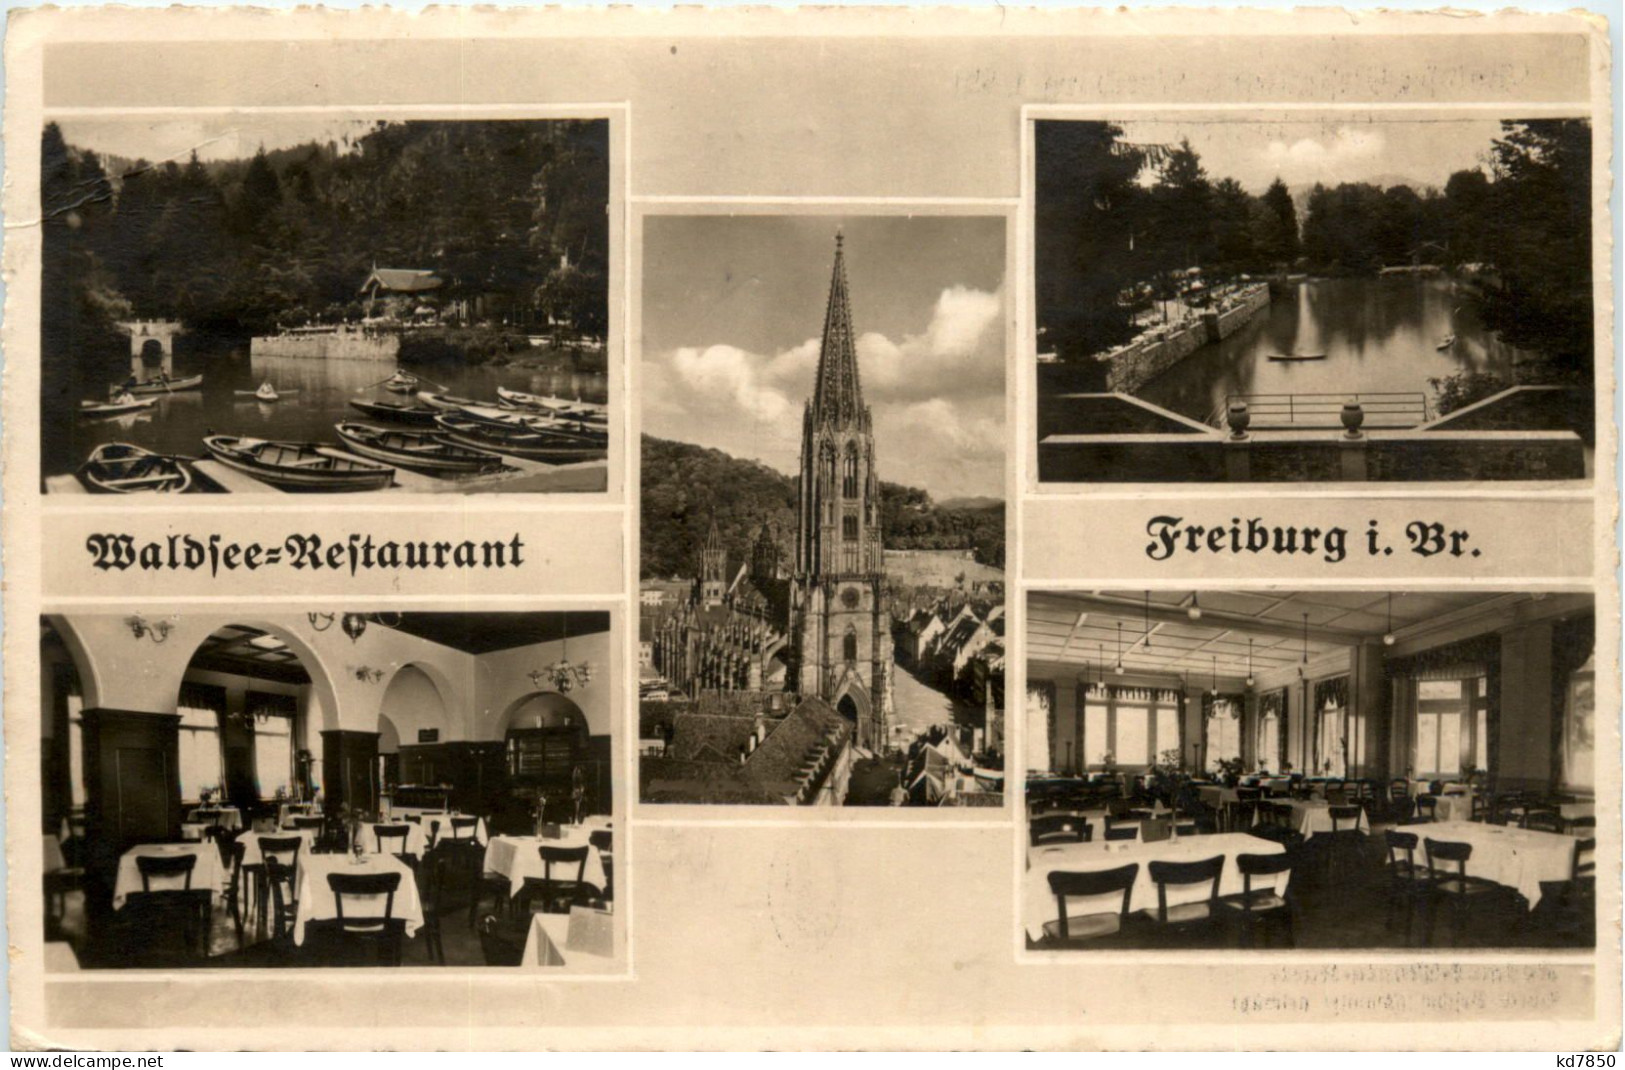 Freiburg, Waldsee-Restaurant - Freiburg I. Br.